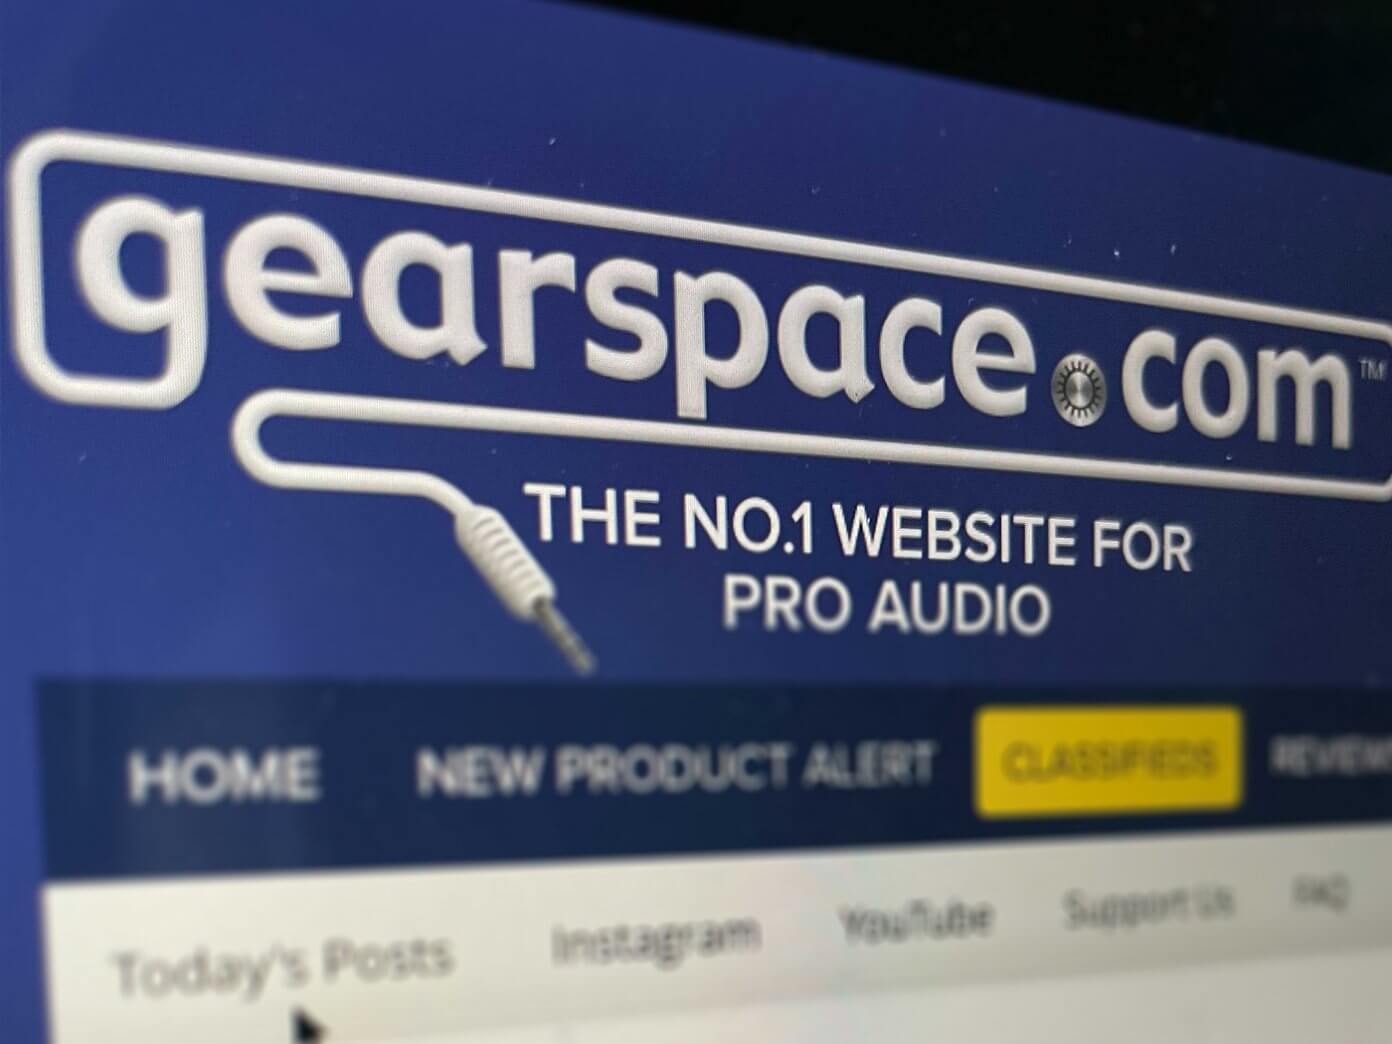 Gearspace.com